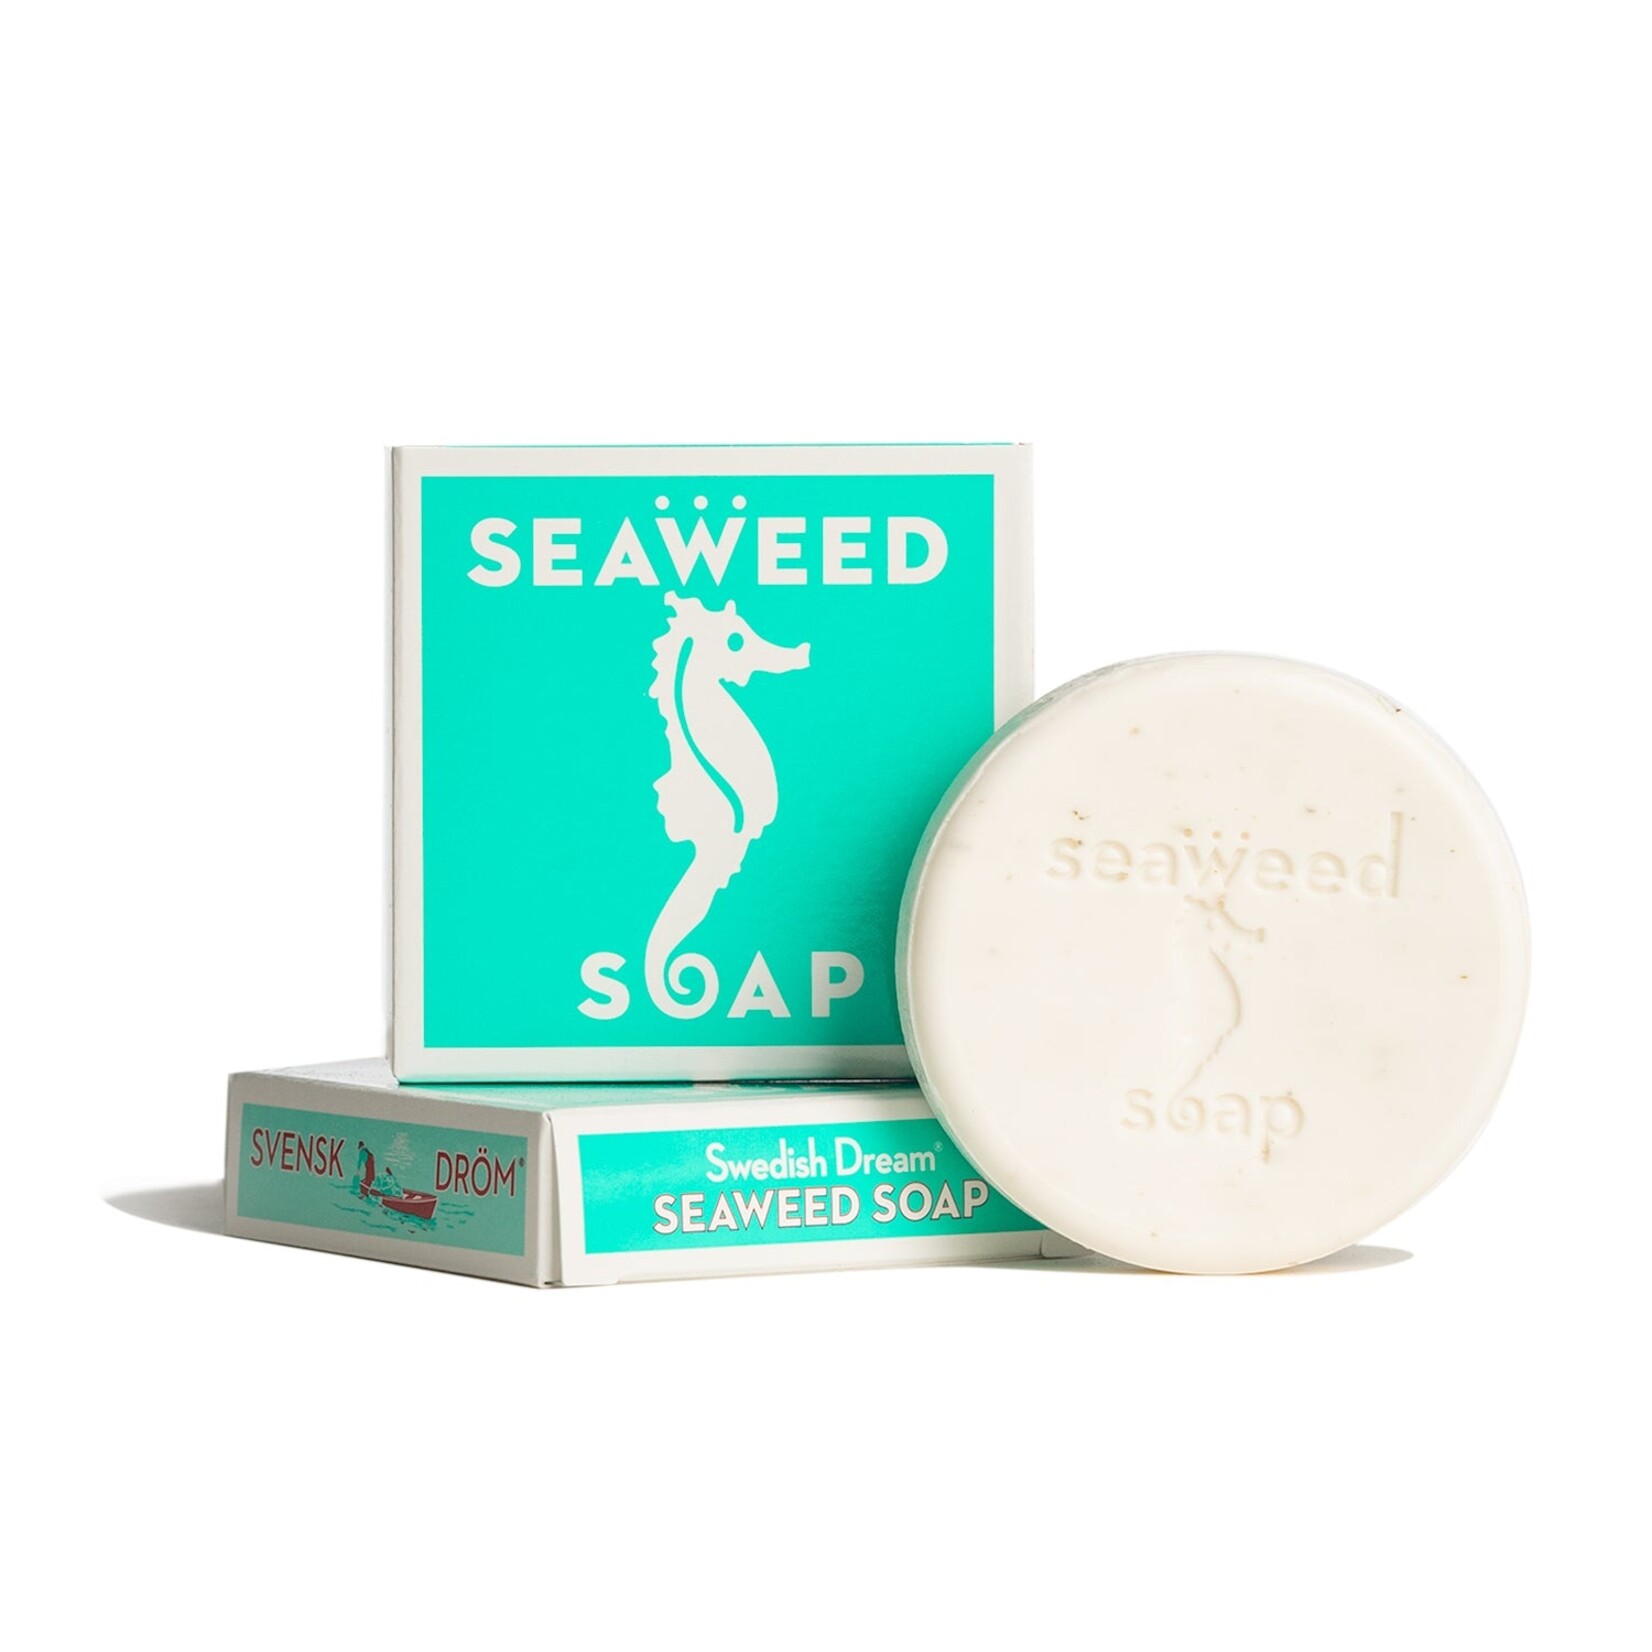 kalastyle Swedish Dream Seaweed Hand Soap - 1.8 oz